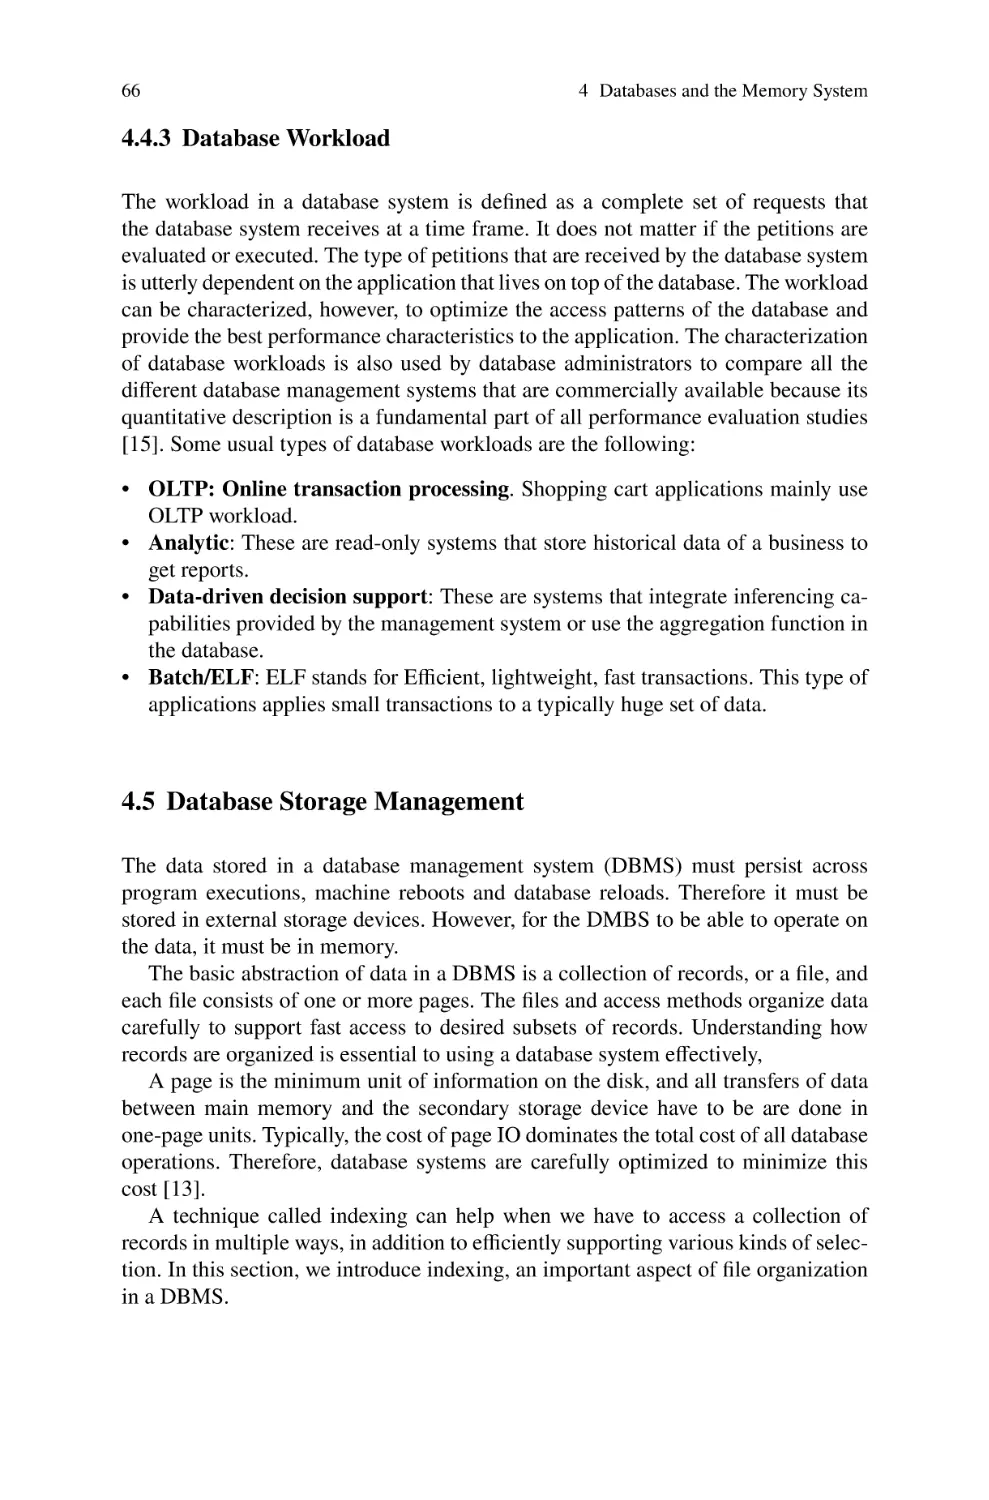 4.4.3 DatabaseWorkload
4.5 Database Storage Management